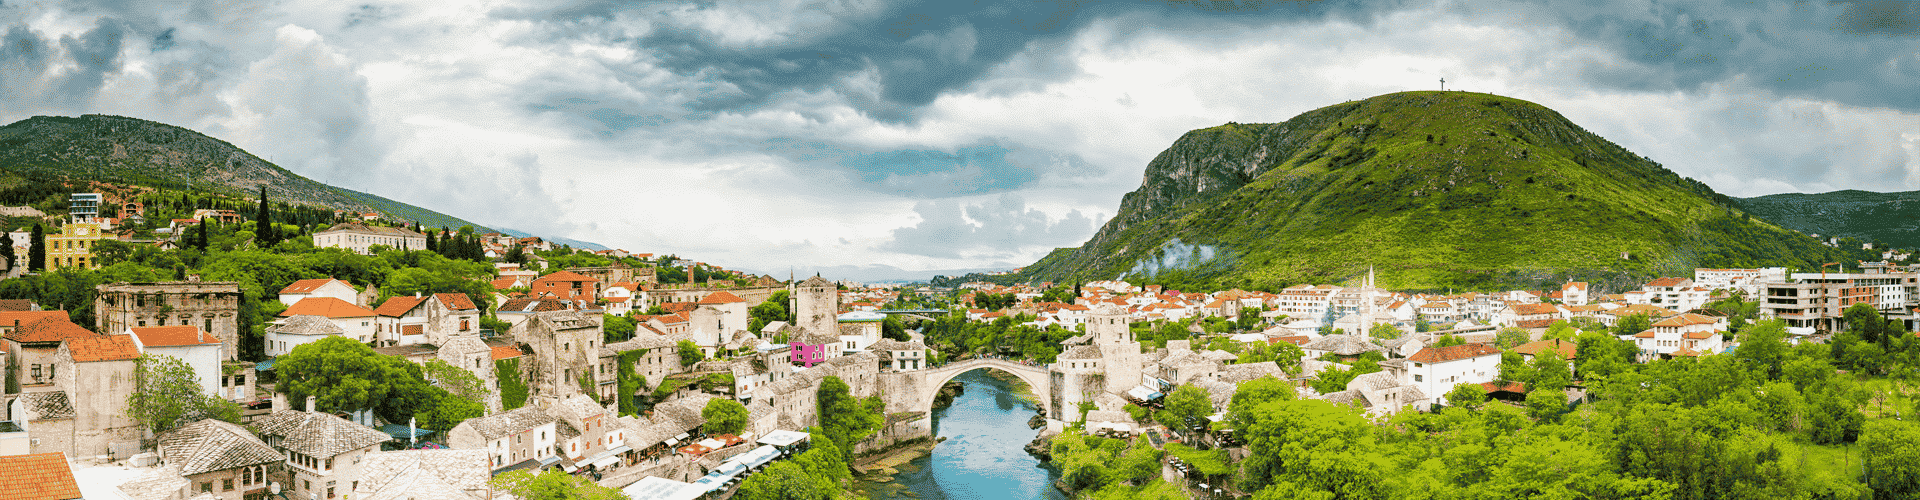 Essential Free Tour Mostar Banner